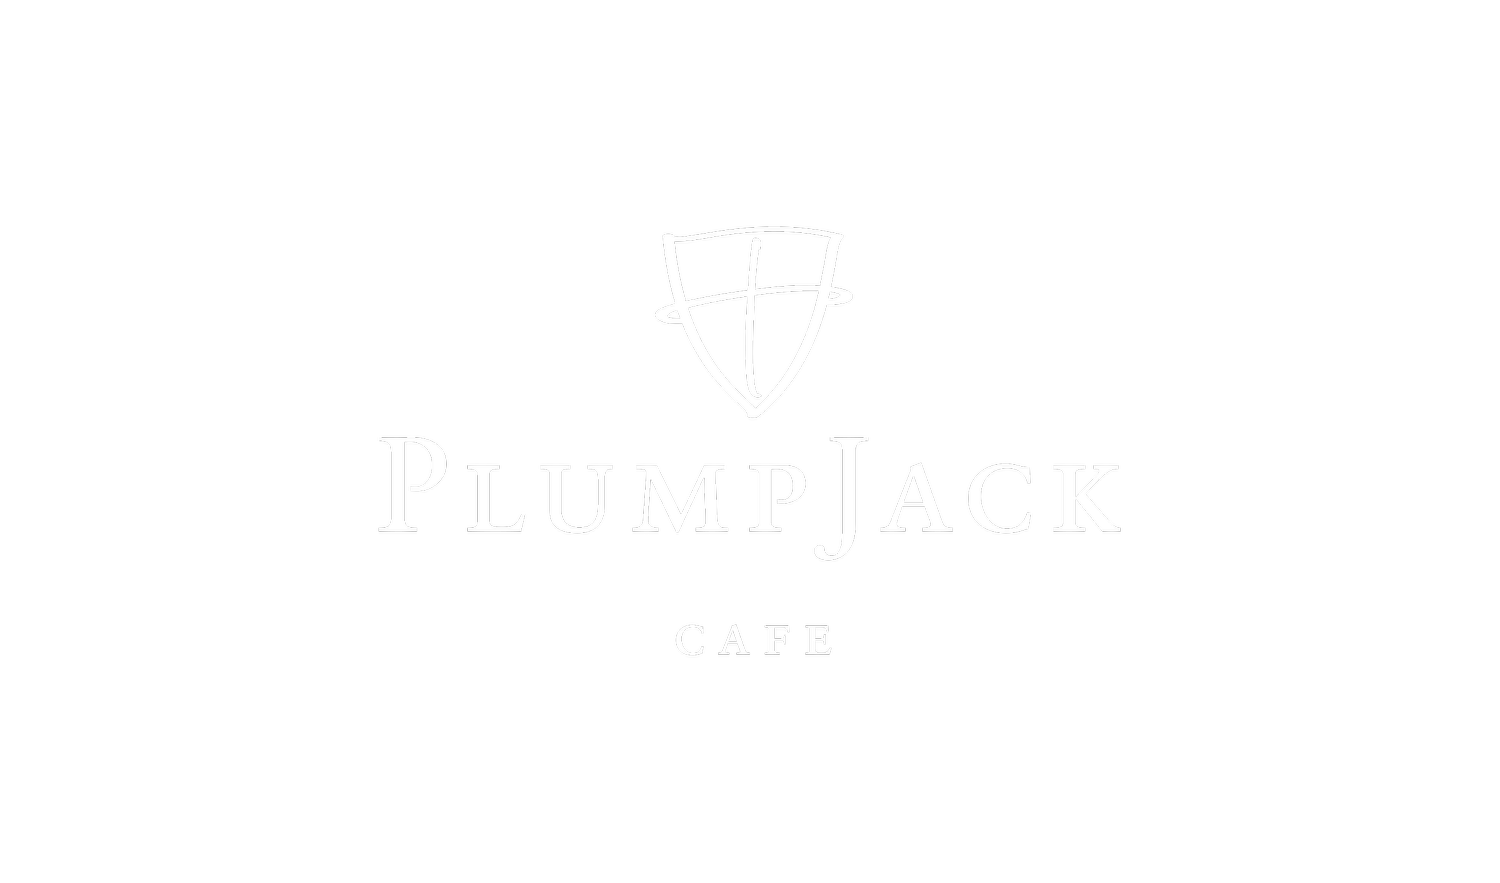 PlumpJack Cafe